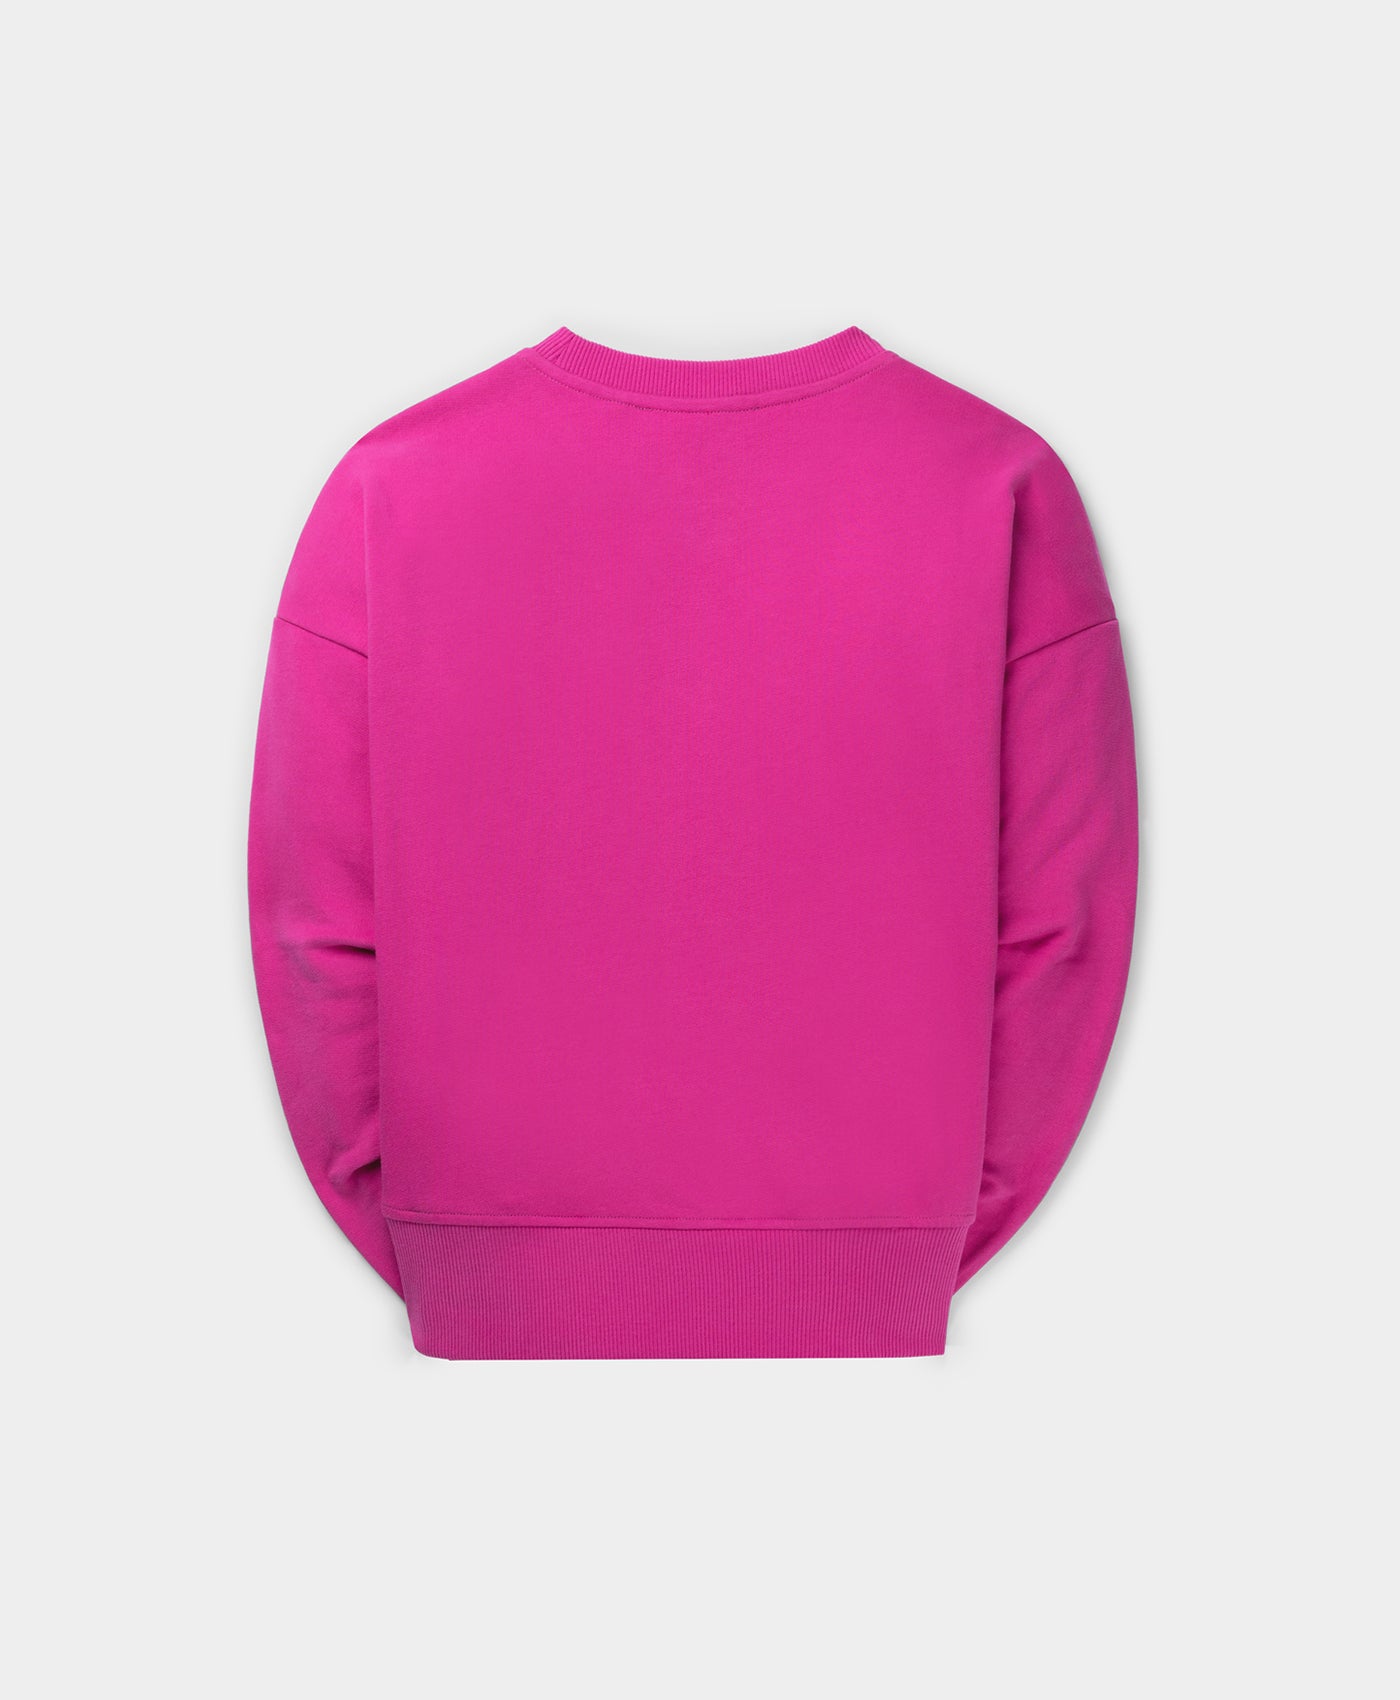 DP - Very Berry Pink Patudi Sweater - Packshot - Rear